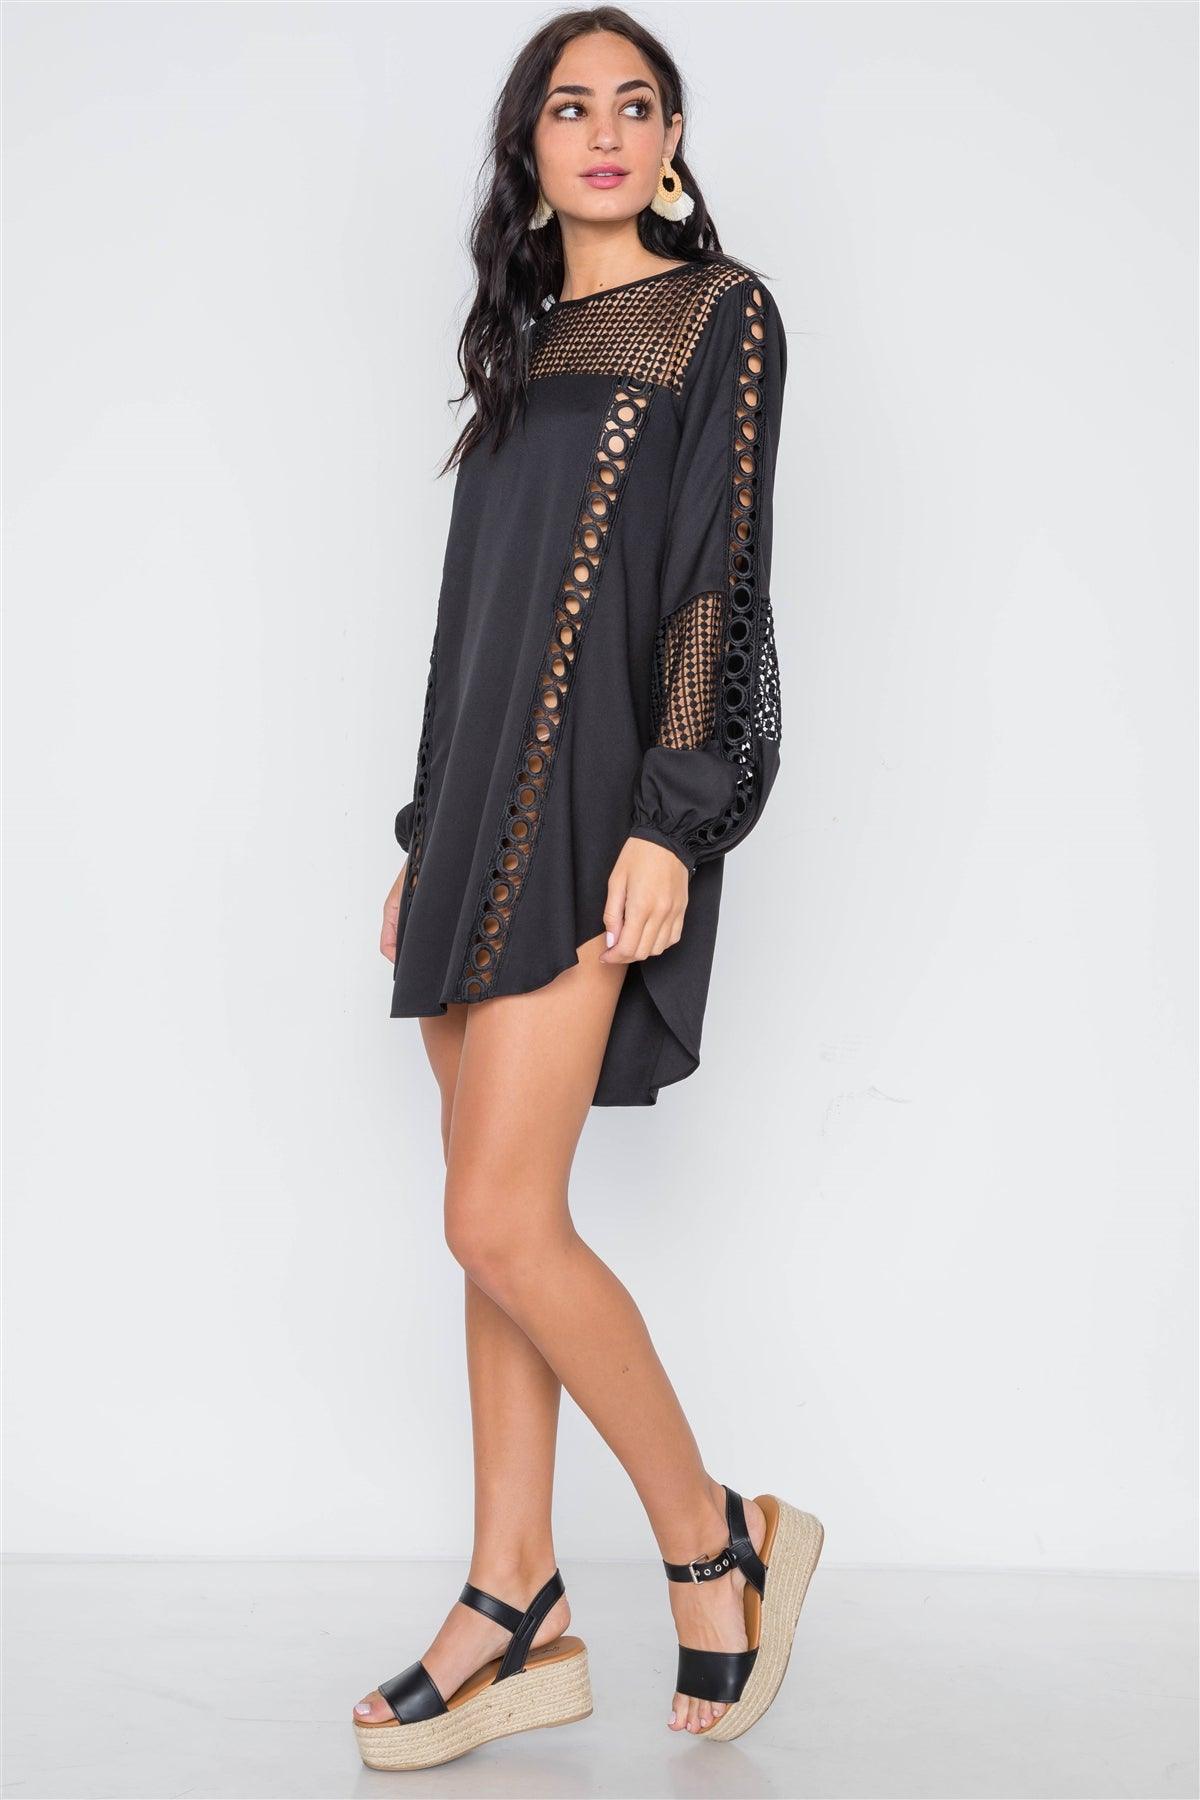 Black Crochet Trim Long Sleeve Tunic Dress